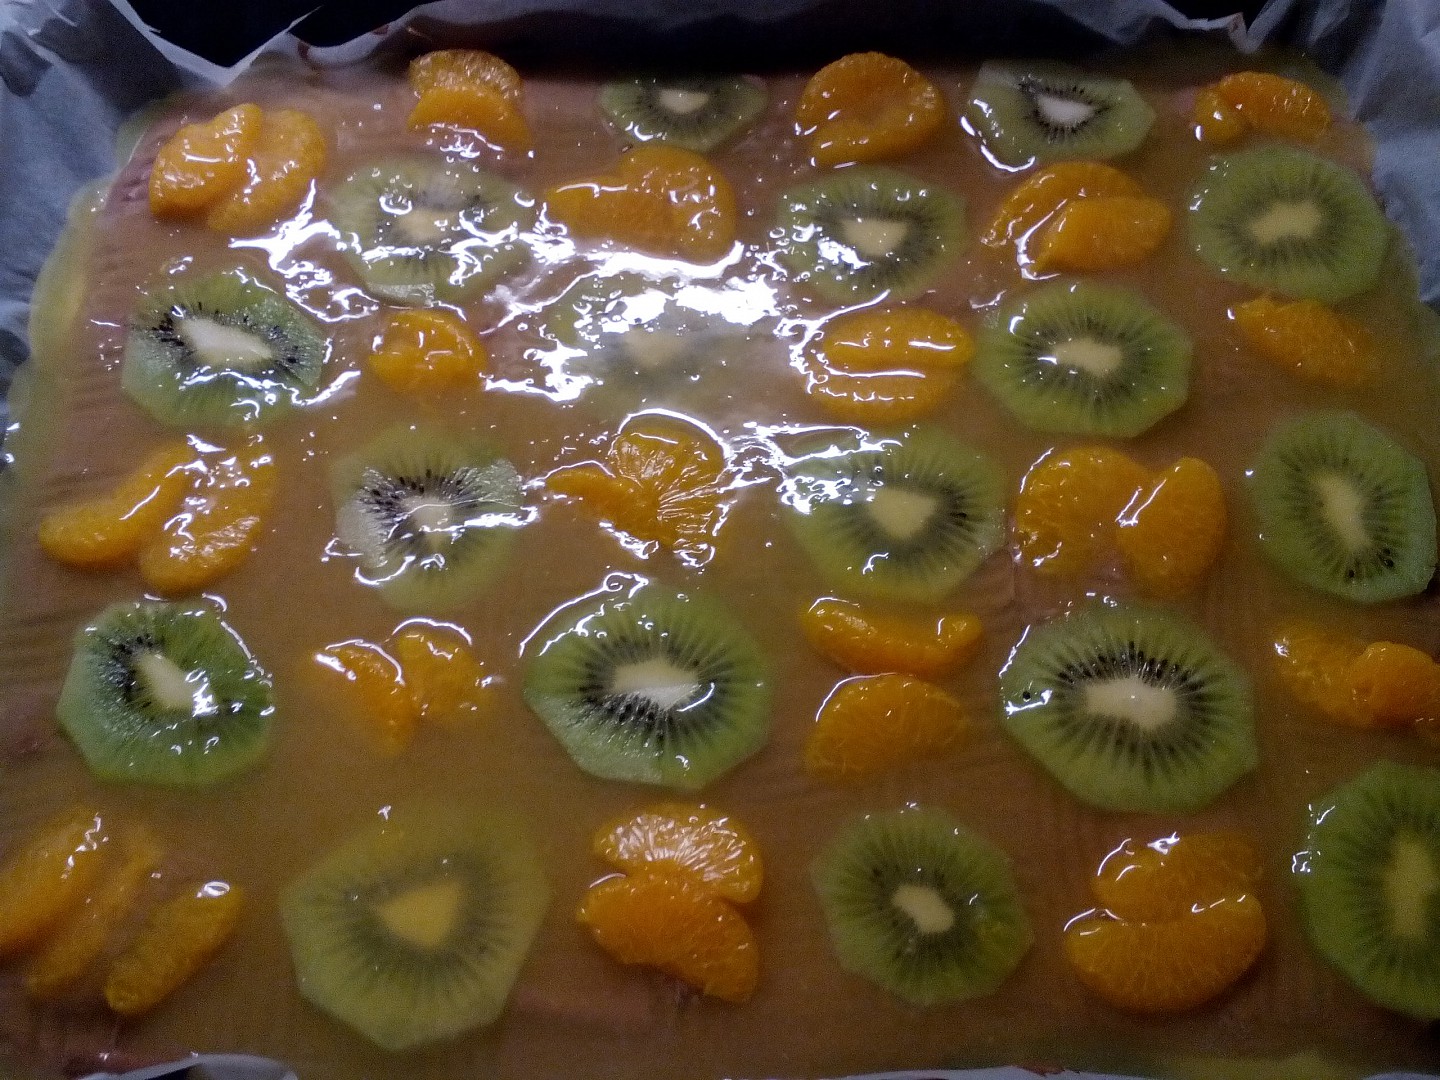 Mandarinkové -(kiwi) kostky